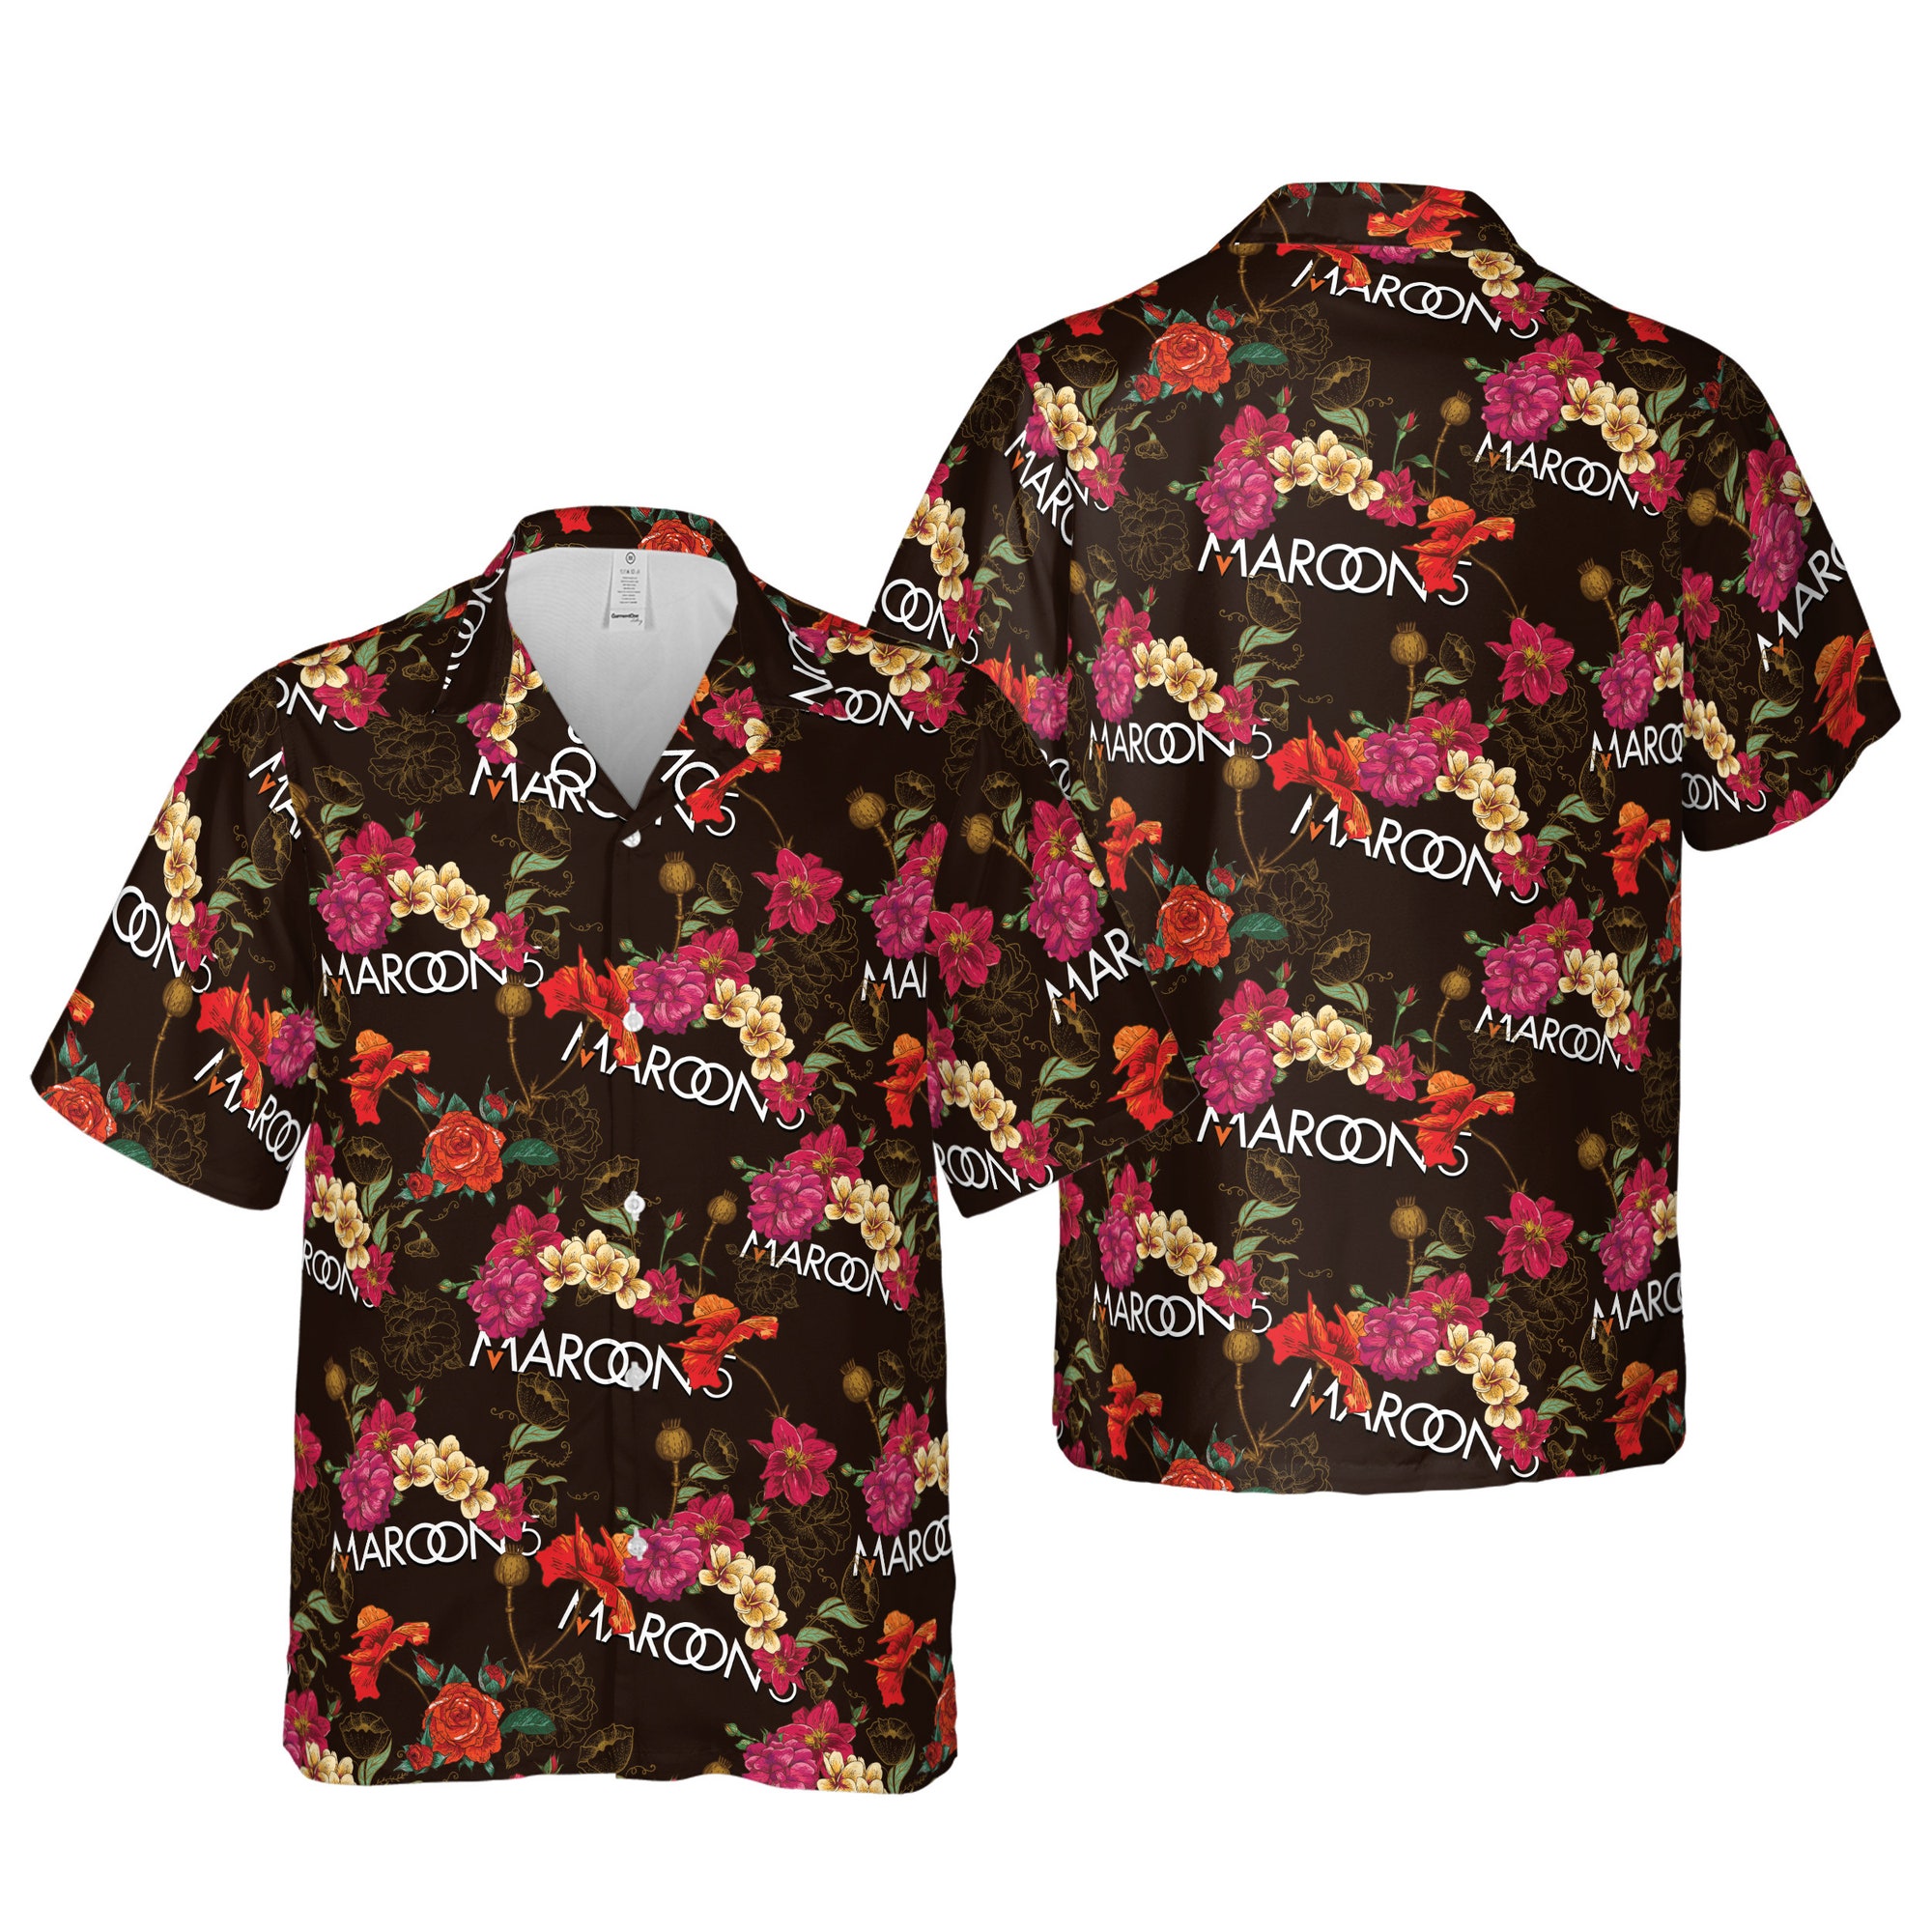 Maroon 5 Button Up Shirts, Maroon 5 Band Hawaiian Shirts